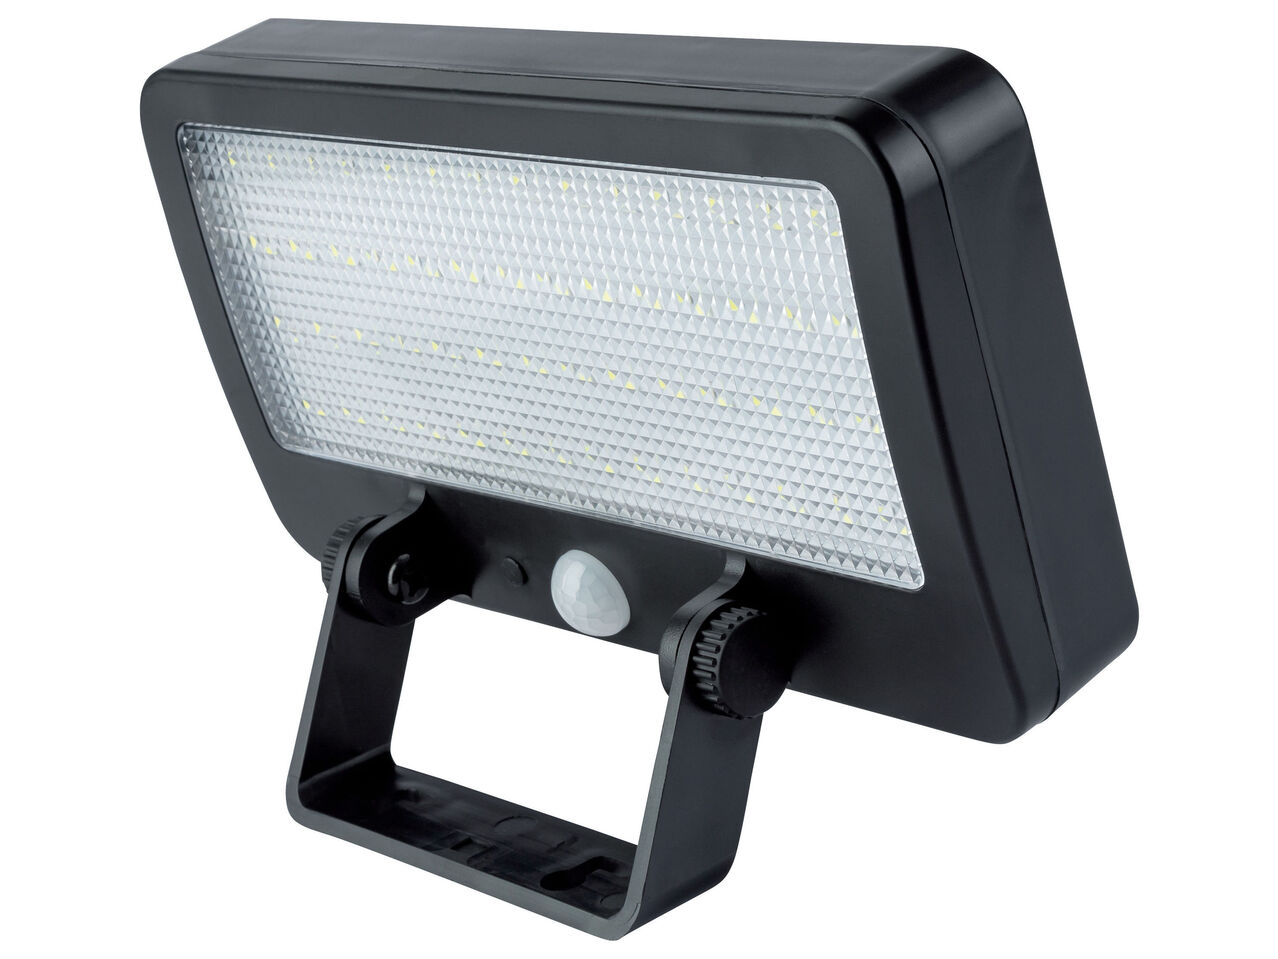 LIVARNO HOME® Reflektor solarny LED z czujnikiem ruchu , cena 44,99 PLN 
LIVARNO ...